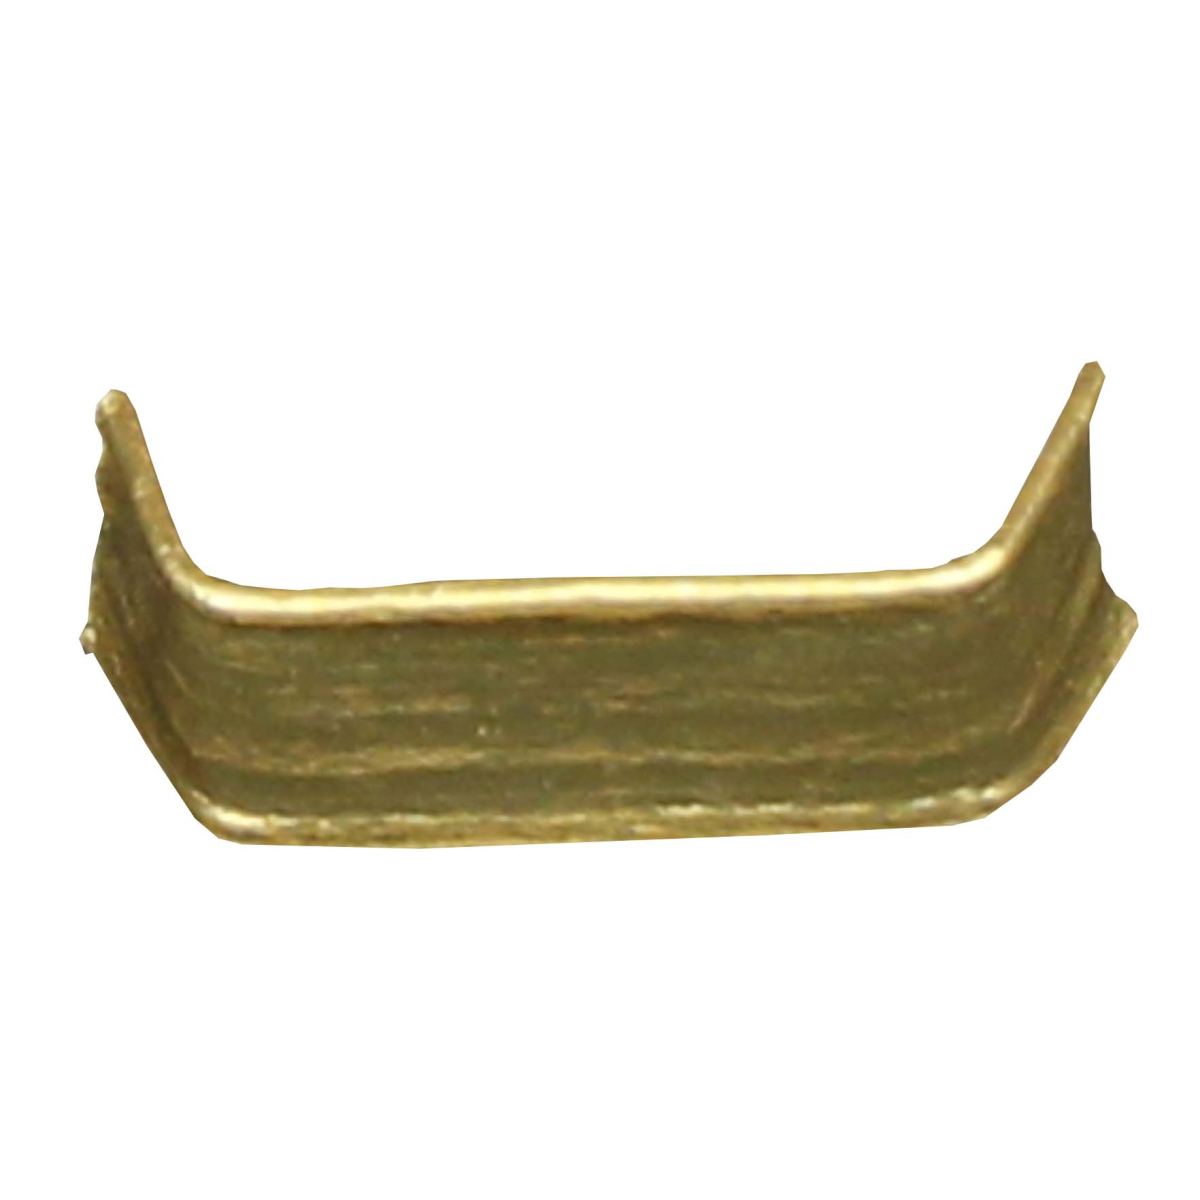 CLIPSE vorgebogen in  u-Form | gold
50 mm x 8 mm / 2-Draht 0,50 mm